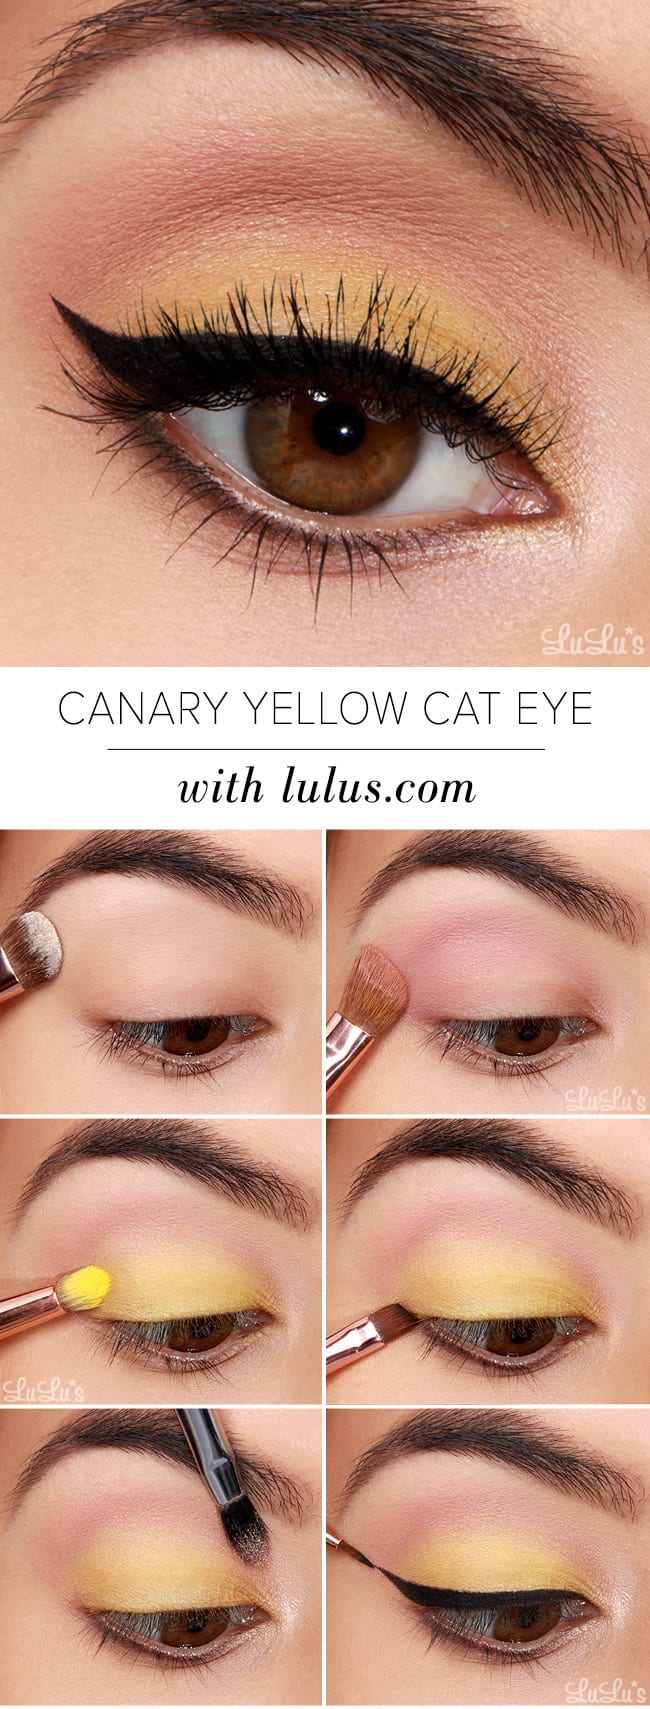 Lulus How-To: Canary Yellow Eye Makeup Tutorial - Lulus.com Fashion Blog